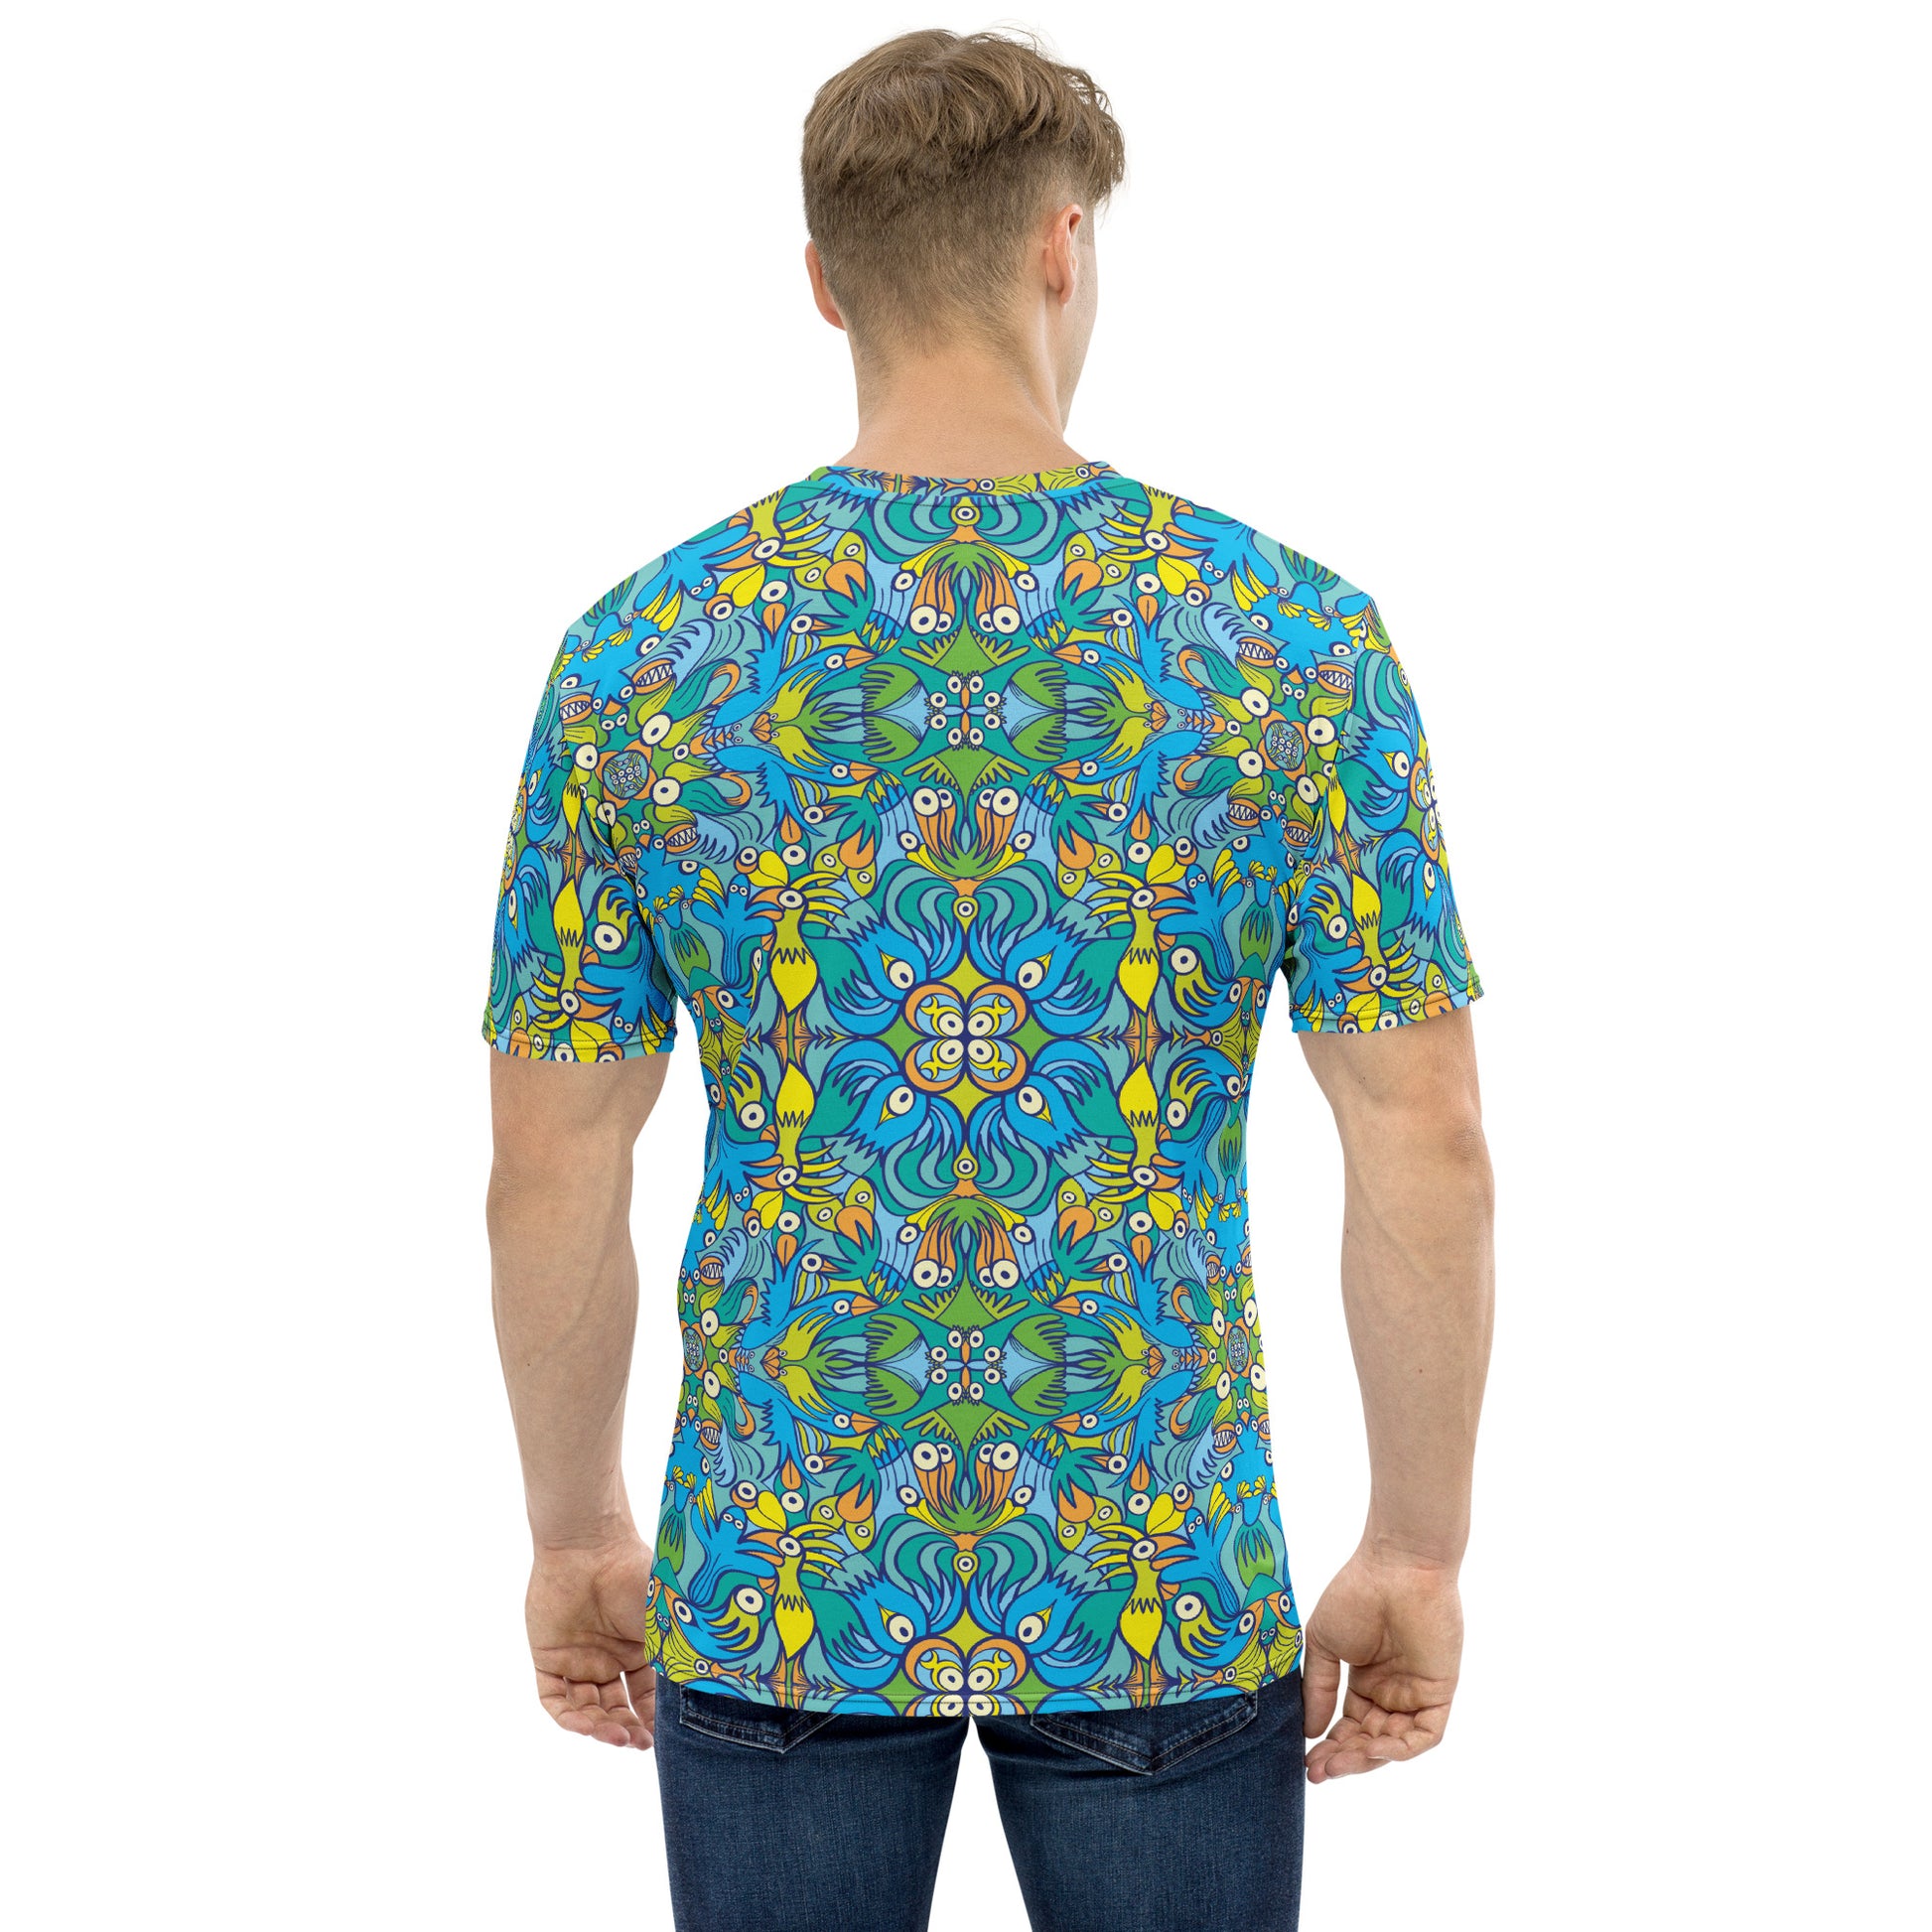 Exotic birds tropical pattern Men's T-shirt. Back view